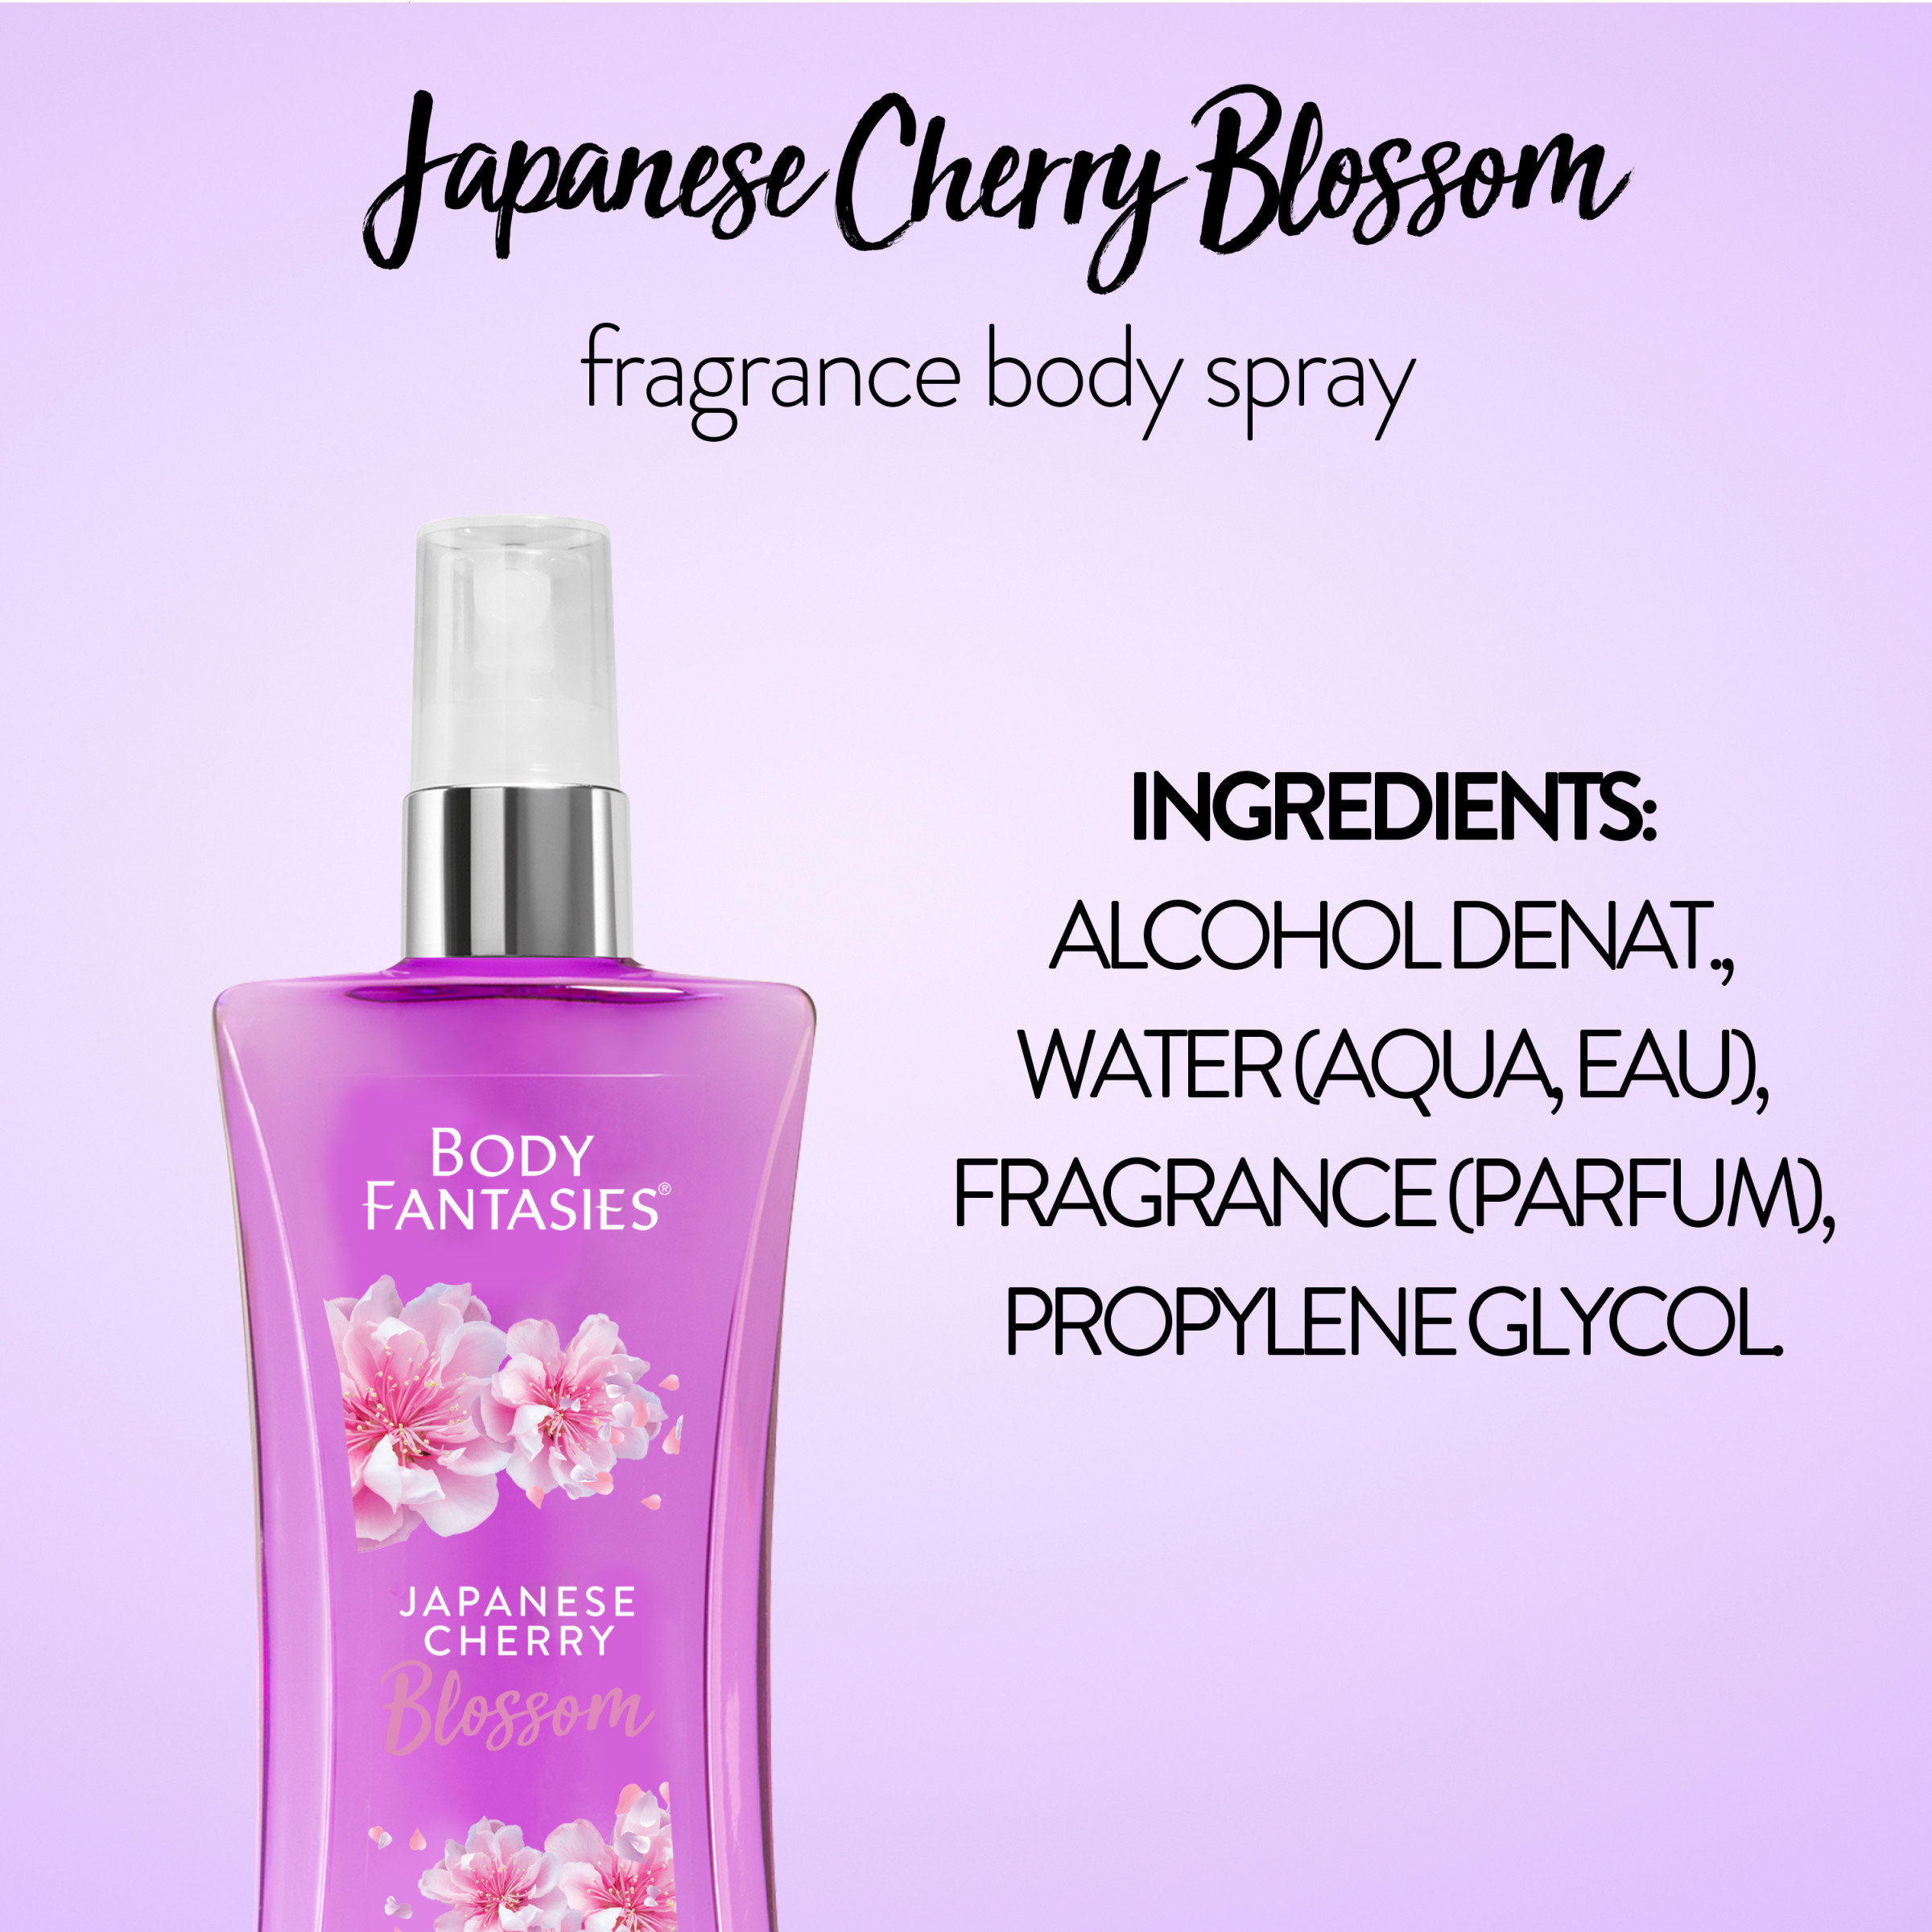 Body Fantasies Signature Japanese Cherry Blossom Fragrance Body Spray for Women, 8 fl.oz. - image 3 of 8